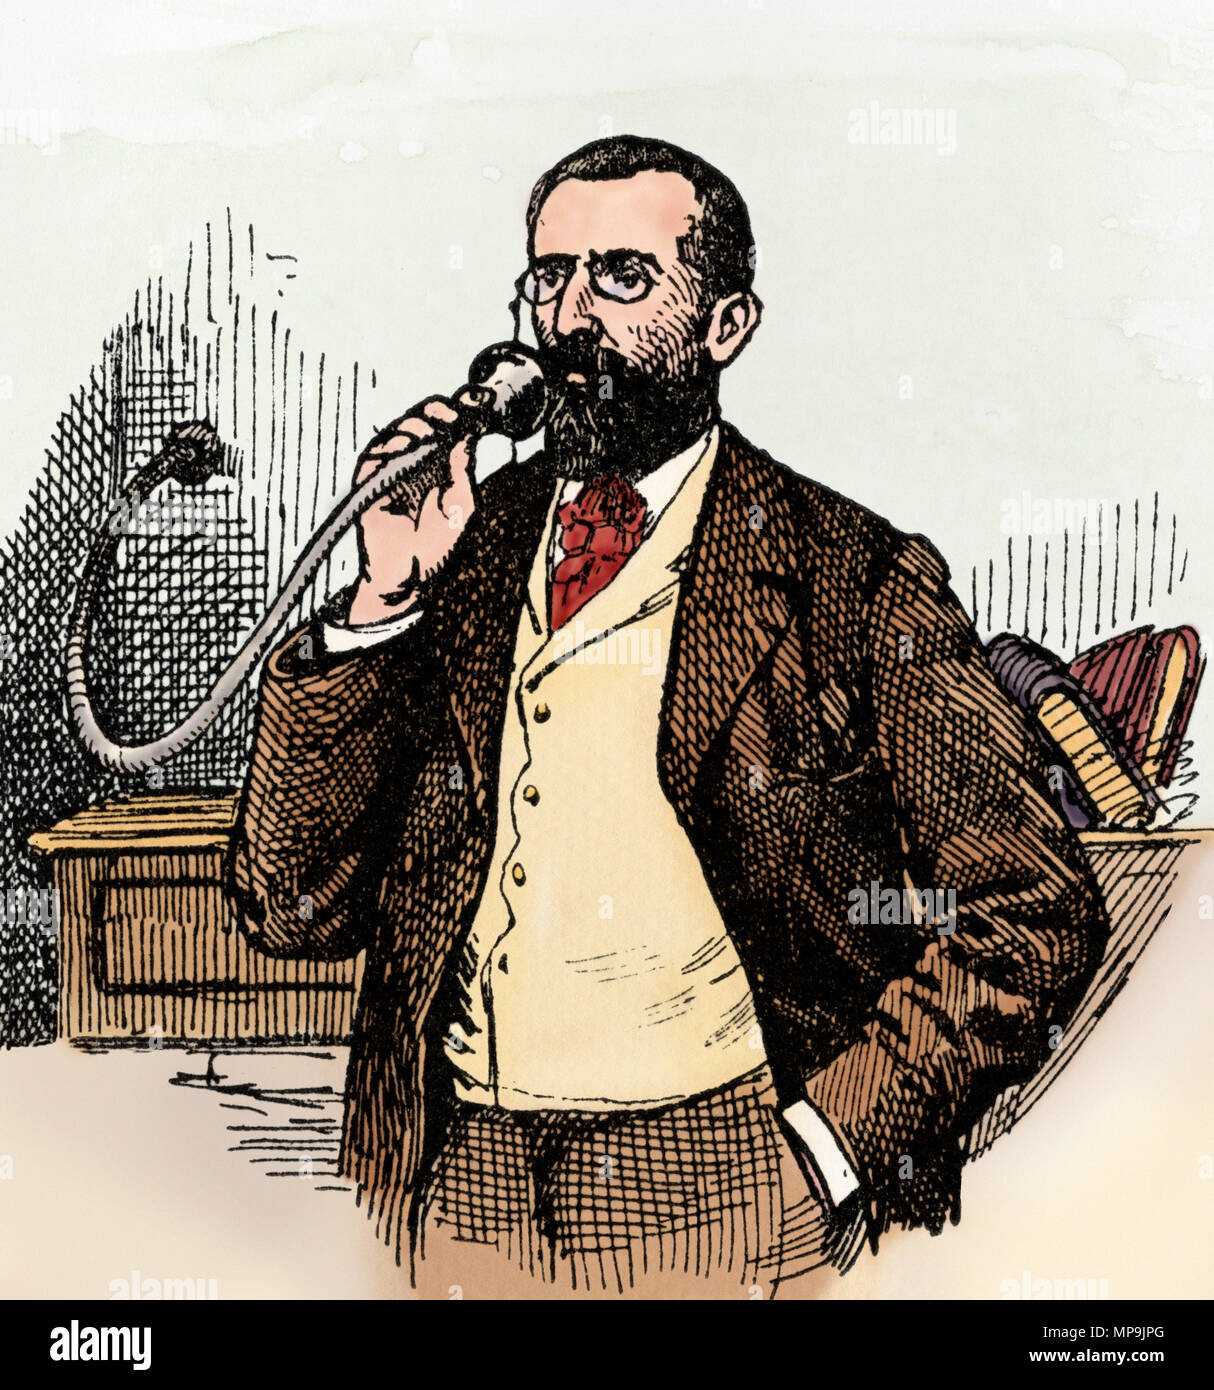 Communicating via speaking tube or hose, 1800s. Digitally colored woodcut Stock Photo